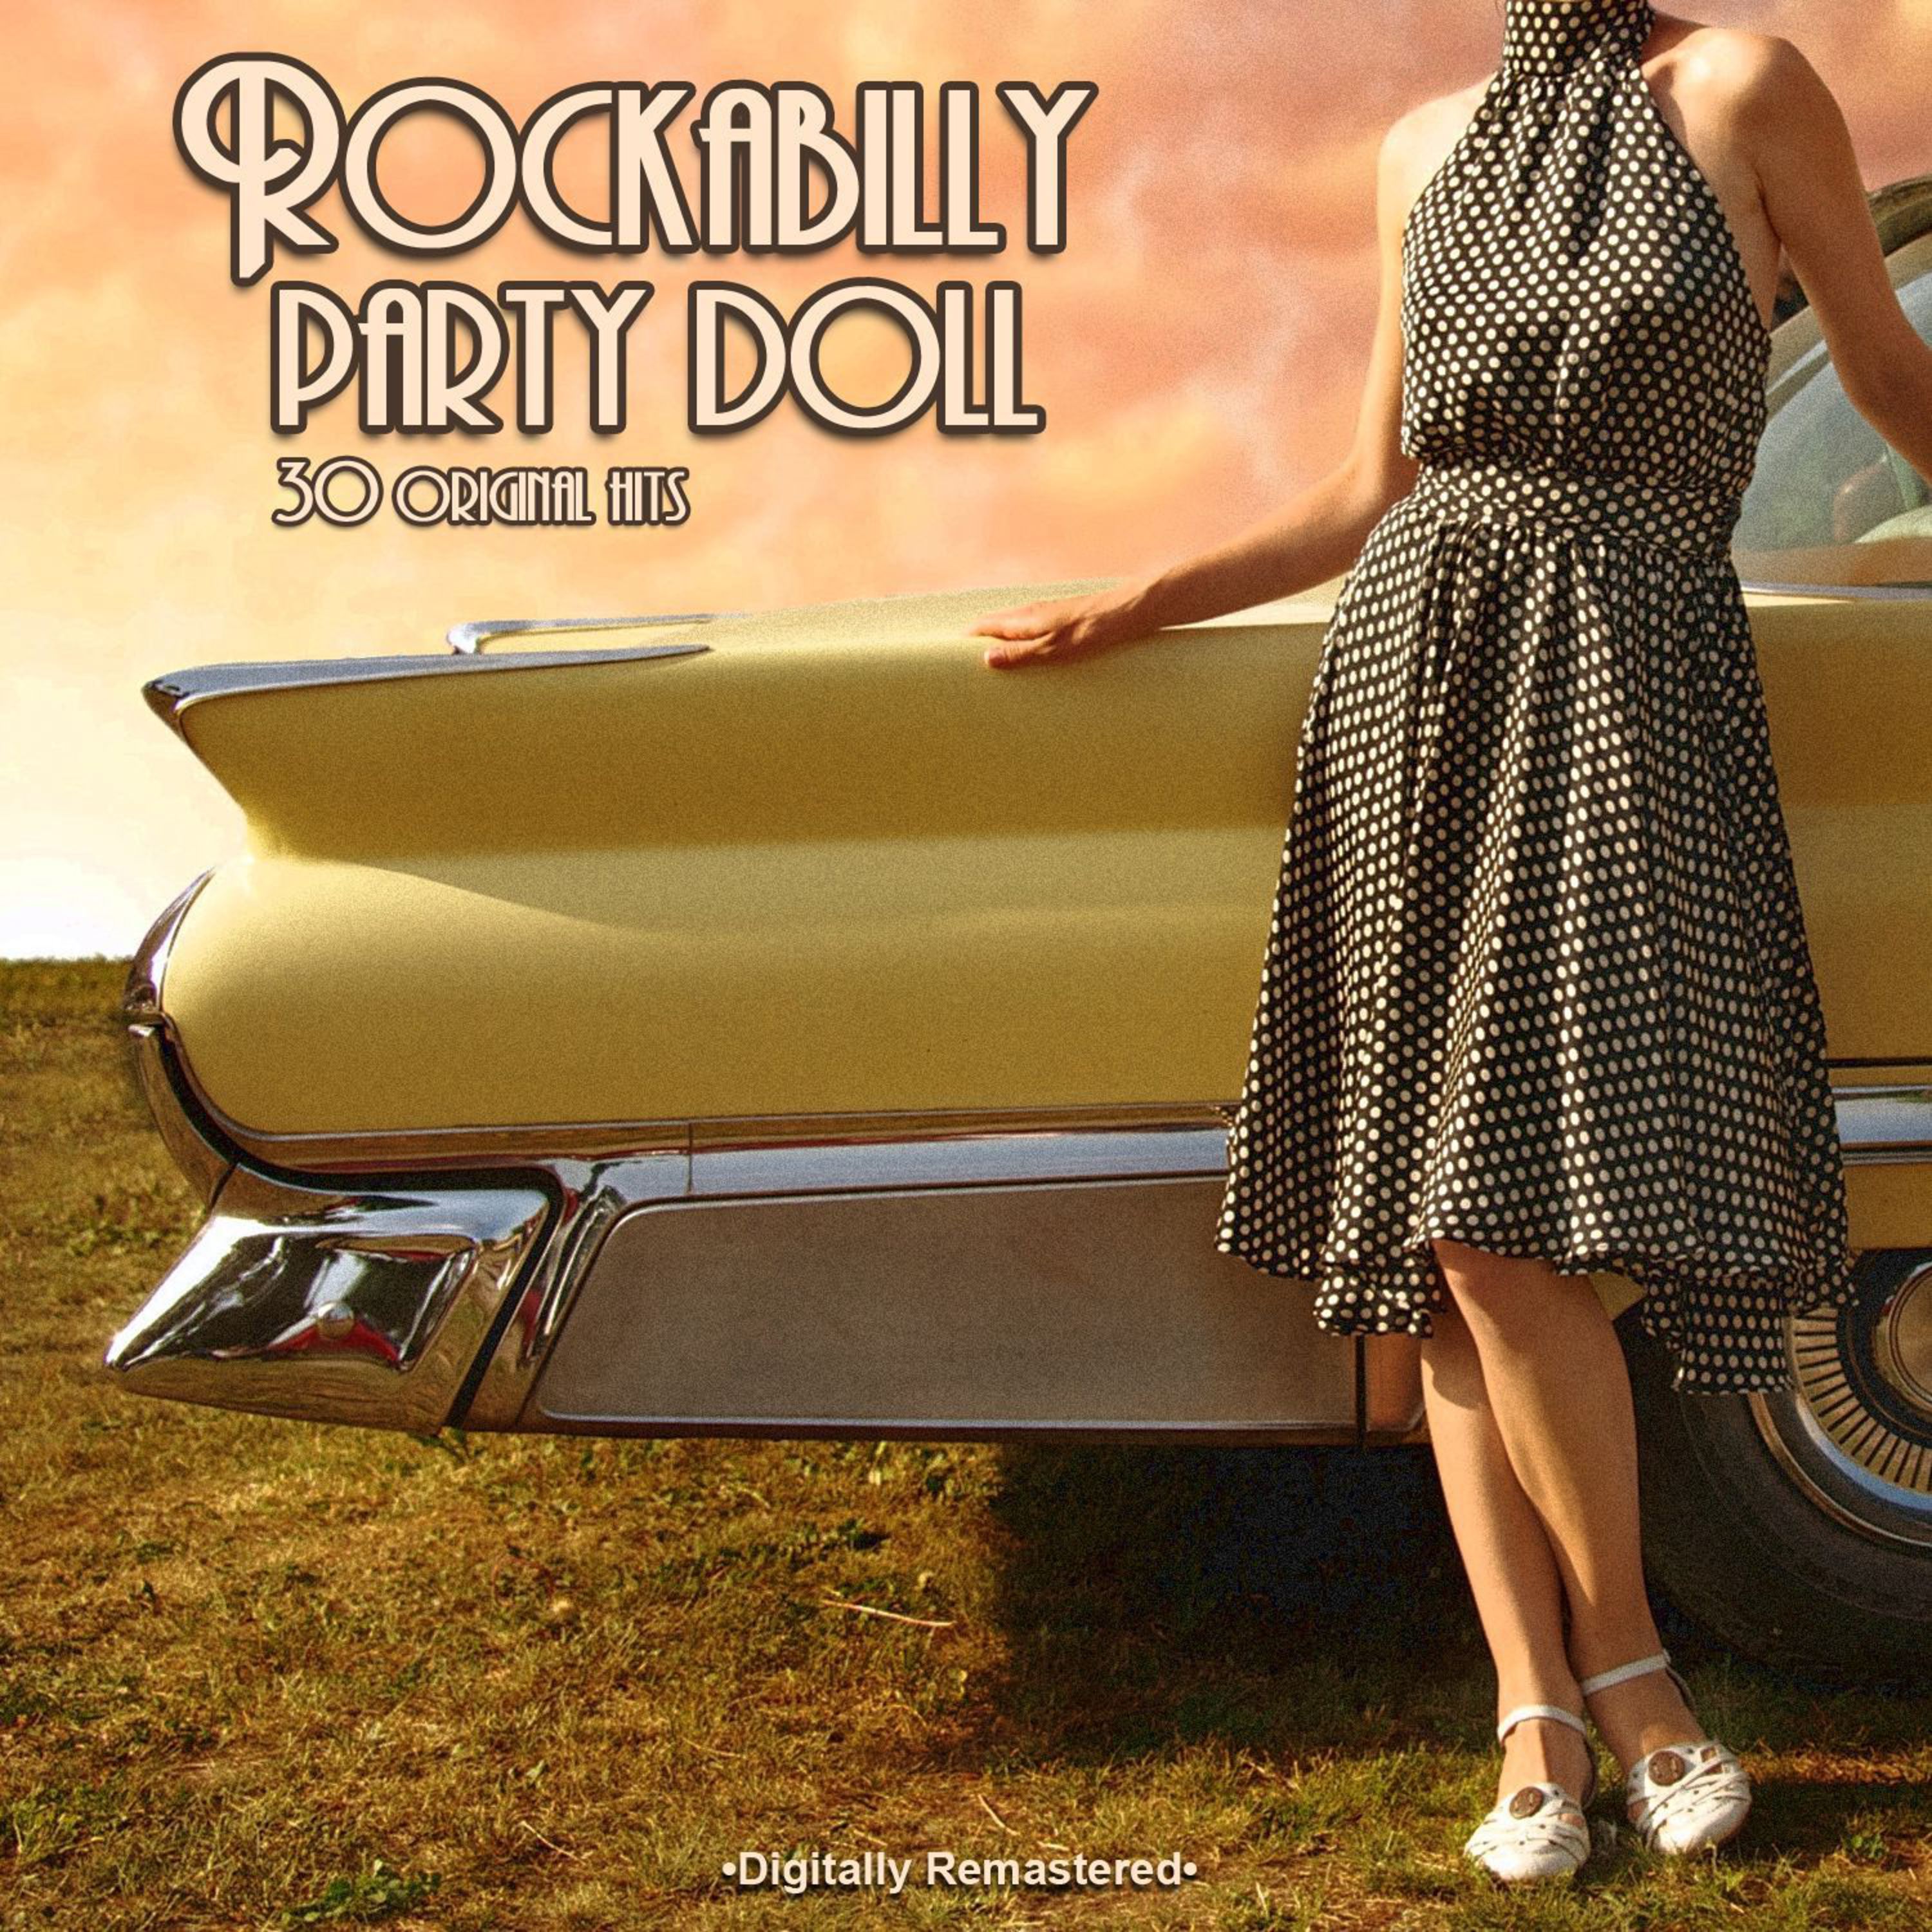 Rockabilly Party Doll (30 Original Hits)